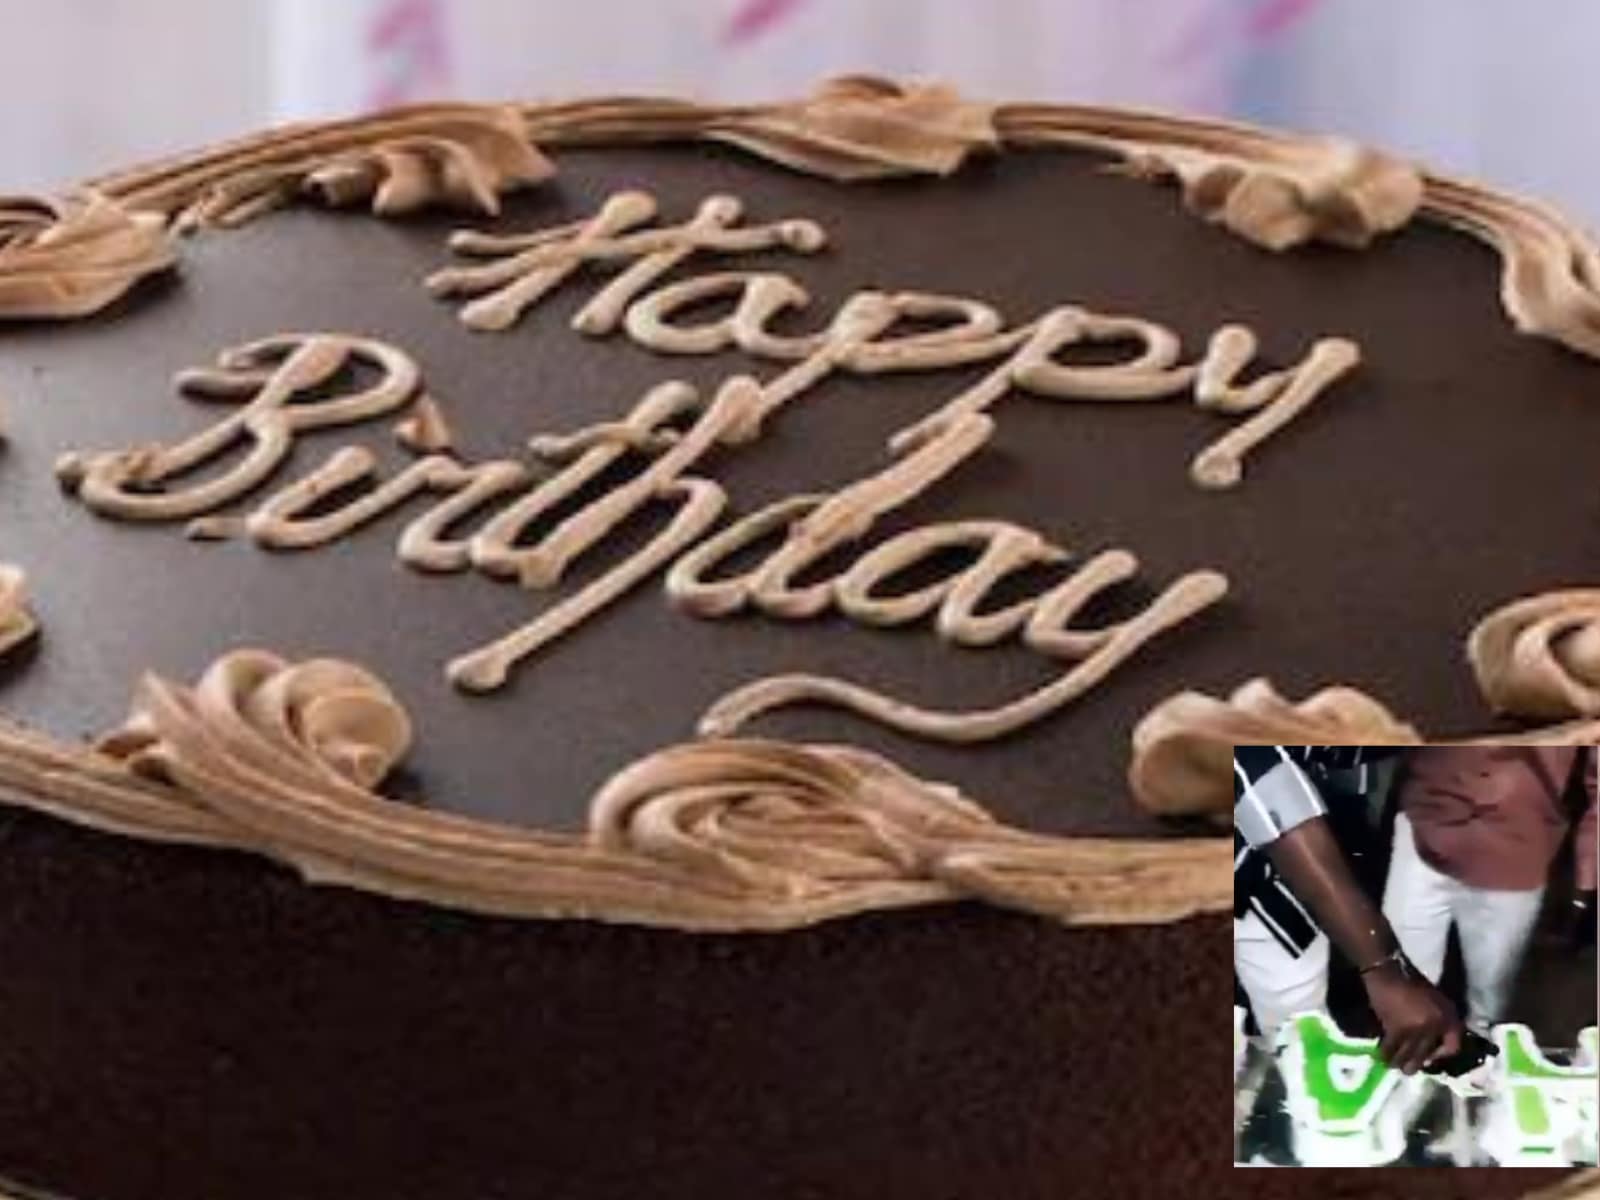 Share more than 131 bjp birthday cake super hot - awesomeenglish.edu.vn